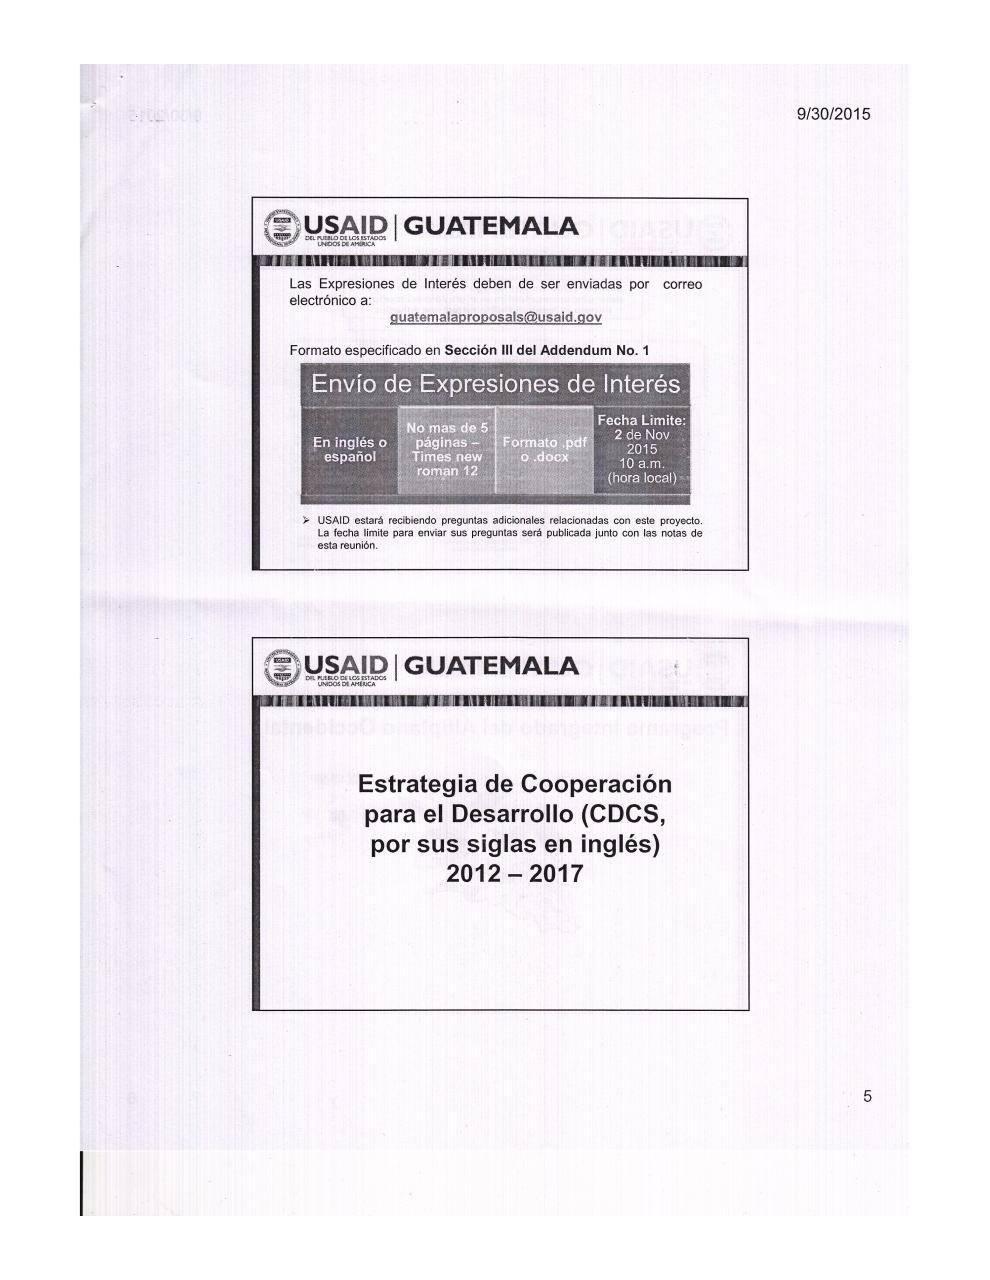 Vista previa del archivo PDF presentacion-usaid.pdf